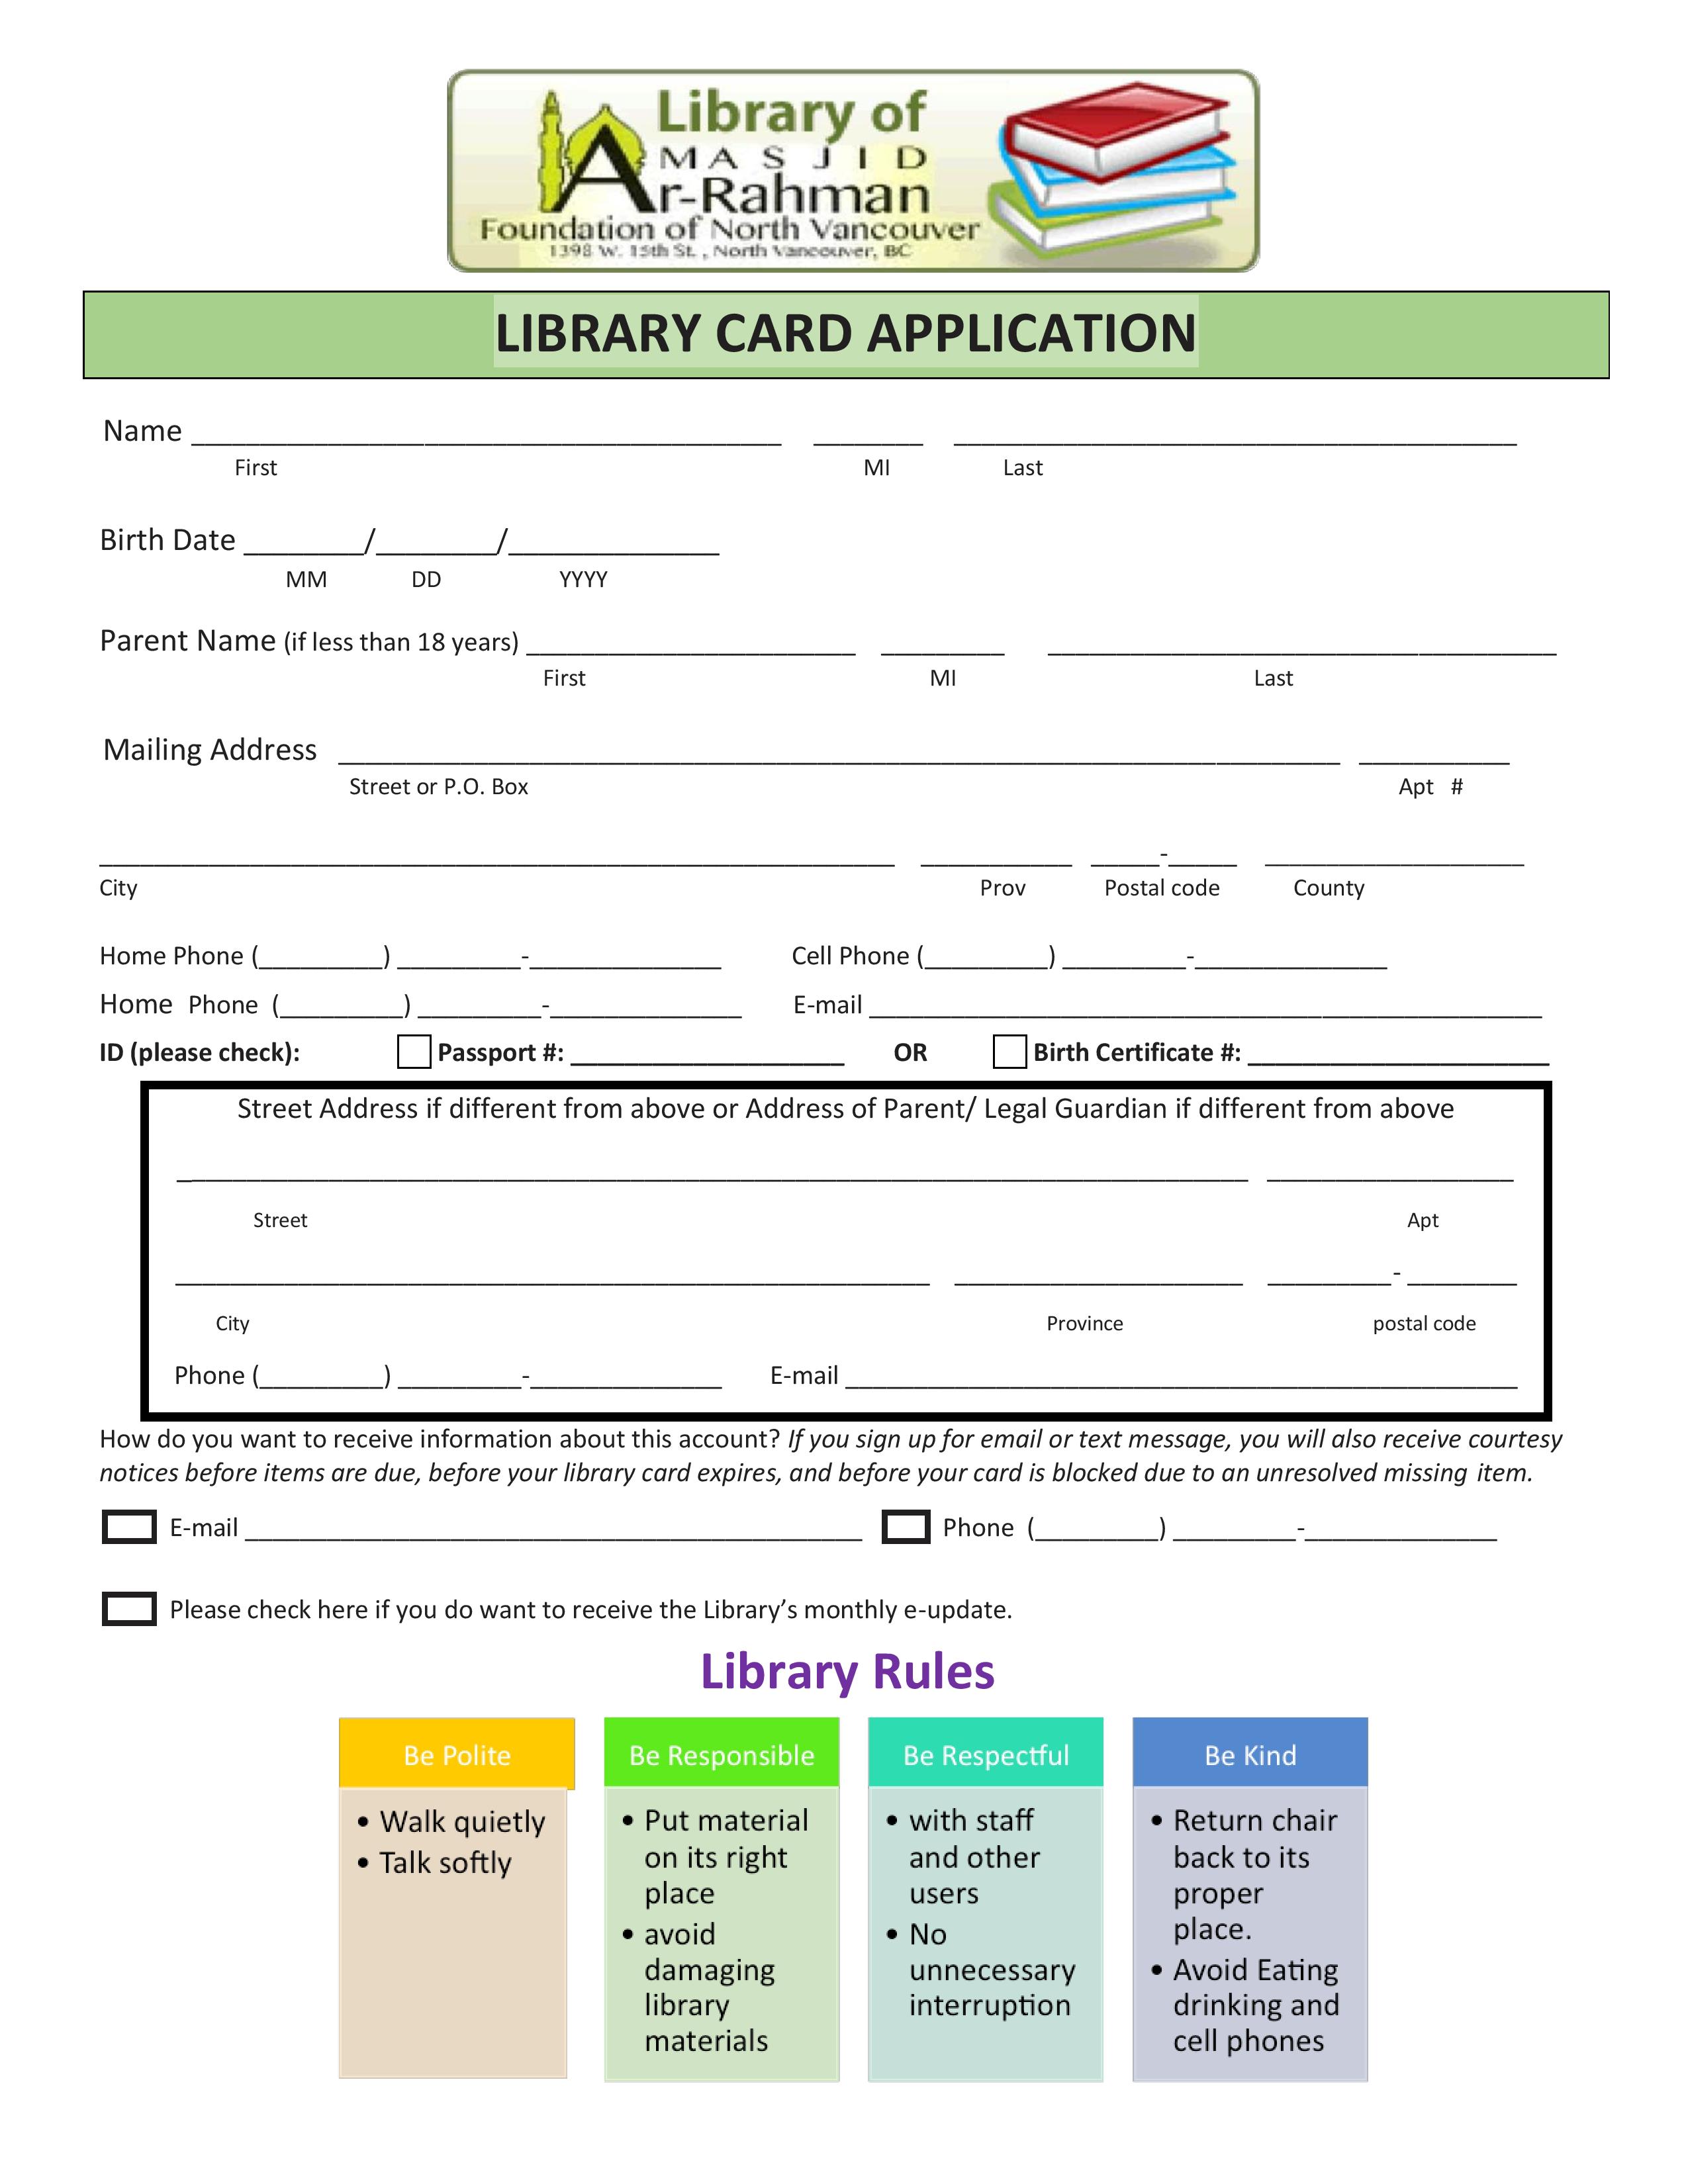 Library Card Registration Form إستمارة التسجيل لعضوية مكتبة المسجد Masjid Ar Rahman 1075